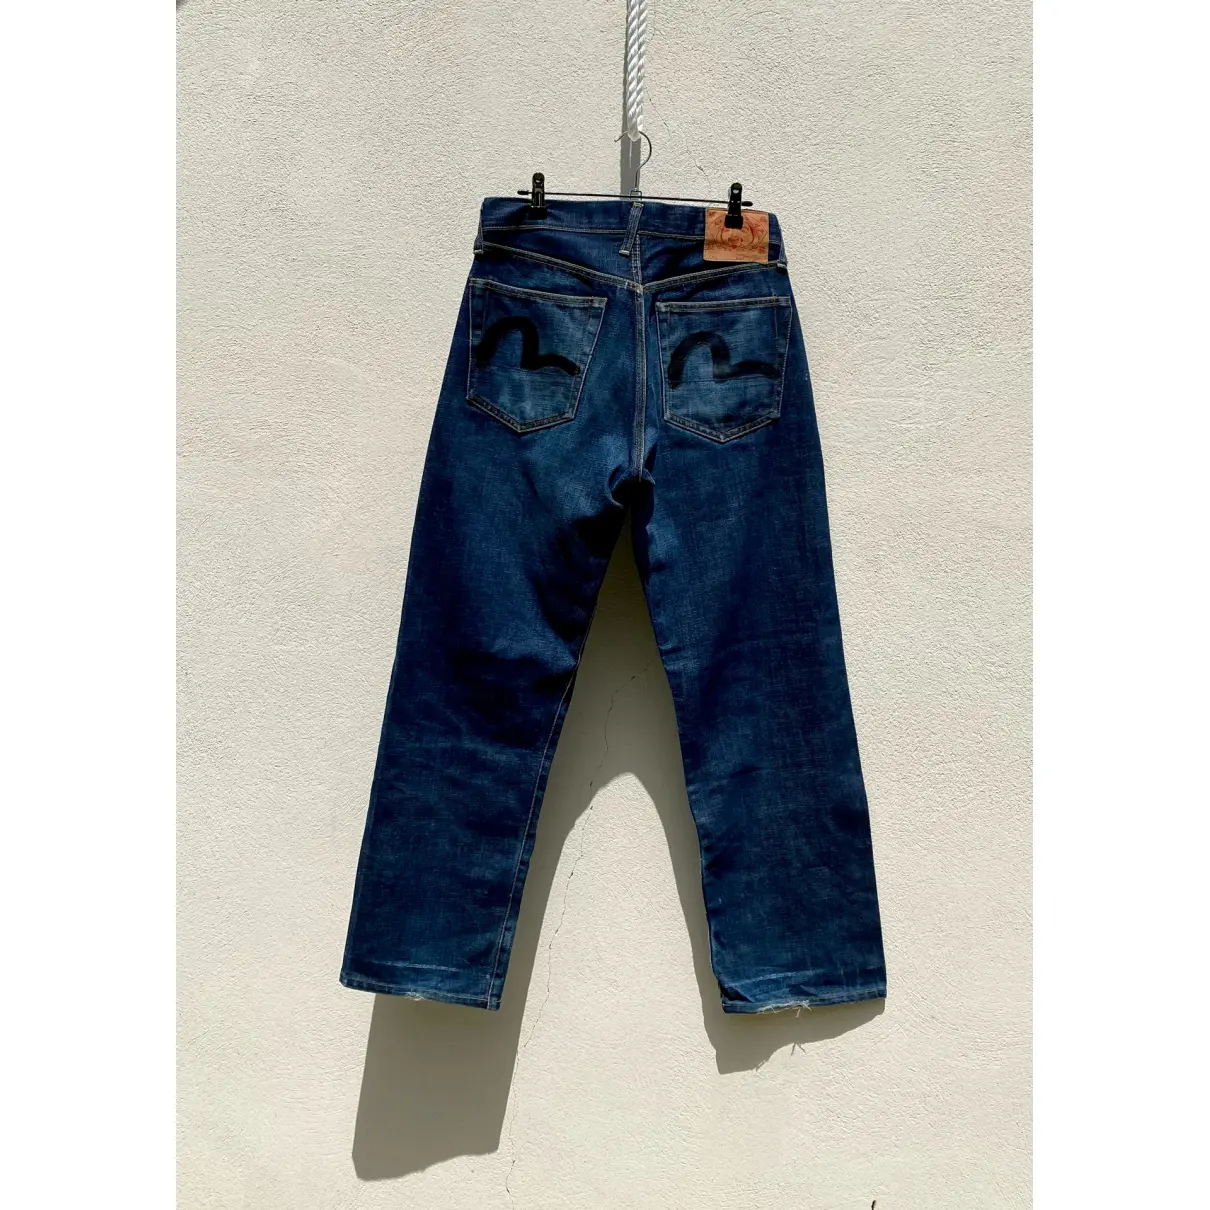 Buy Evisu Straight jeans online - Vintage